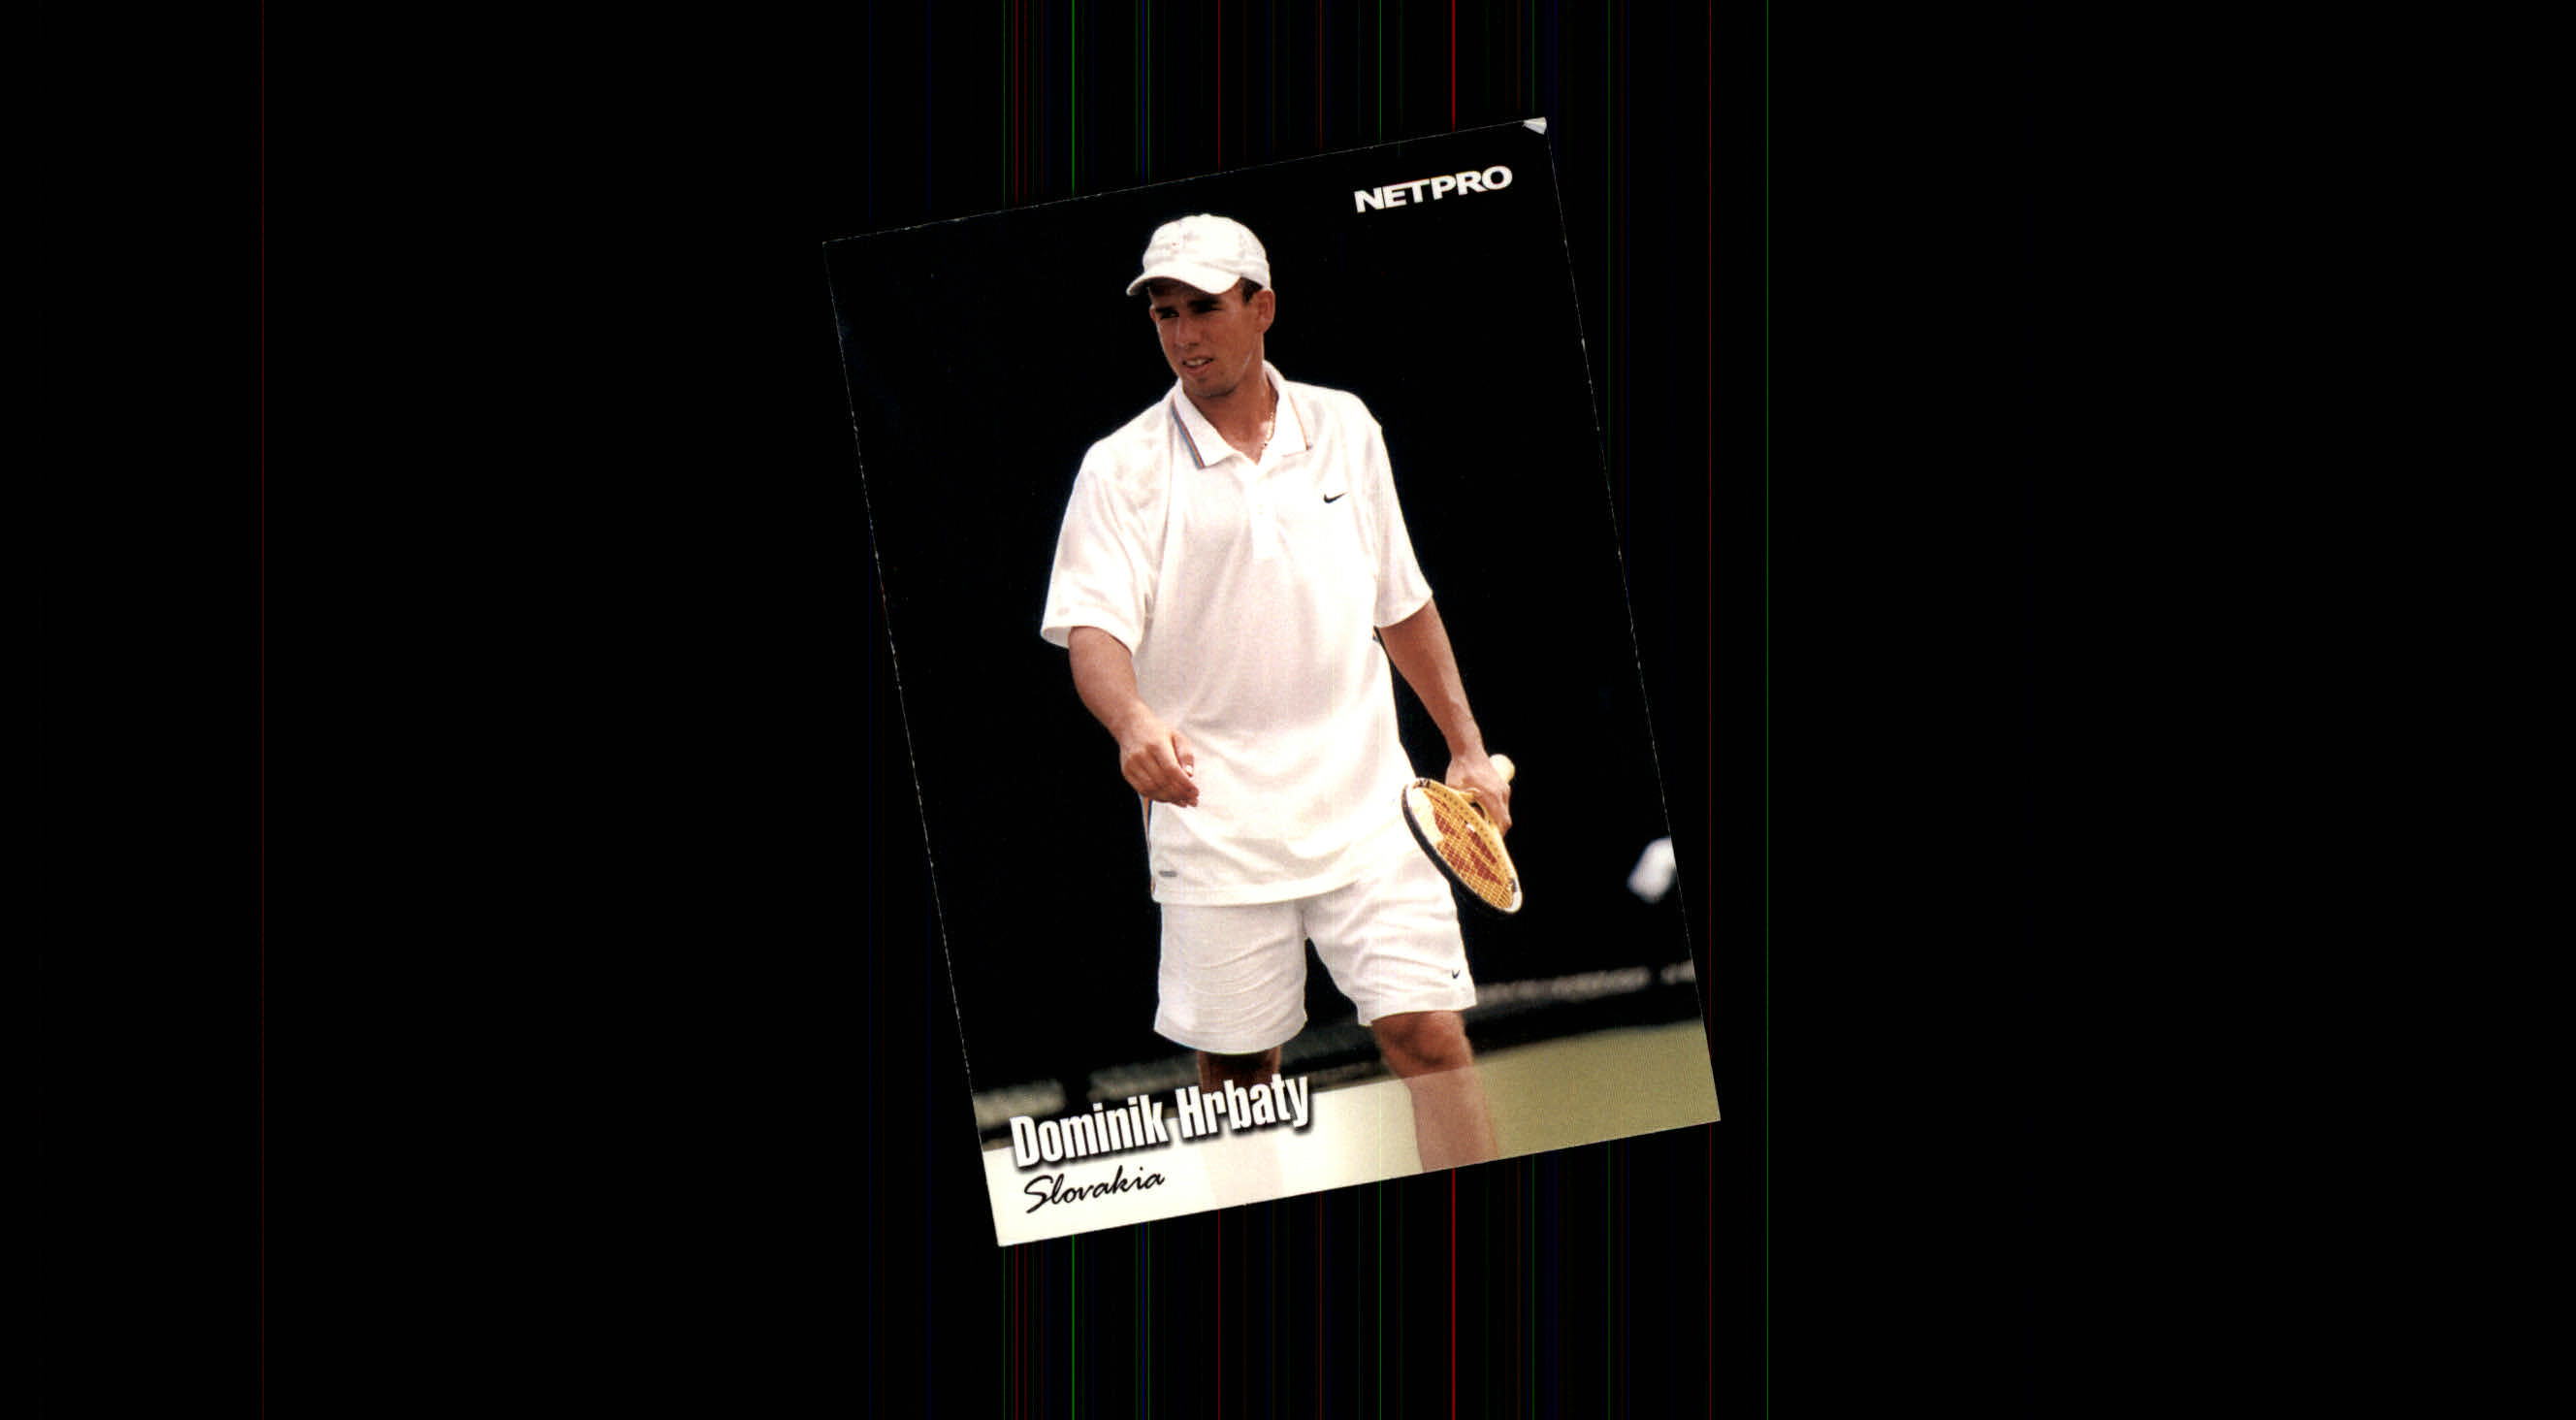  Dominik Hrbaty player image